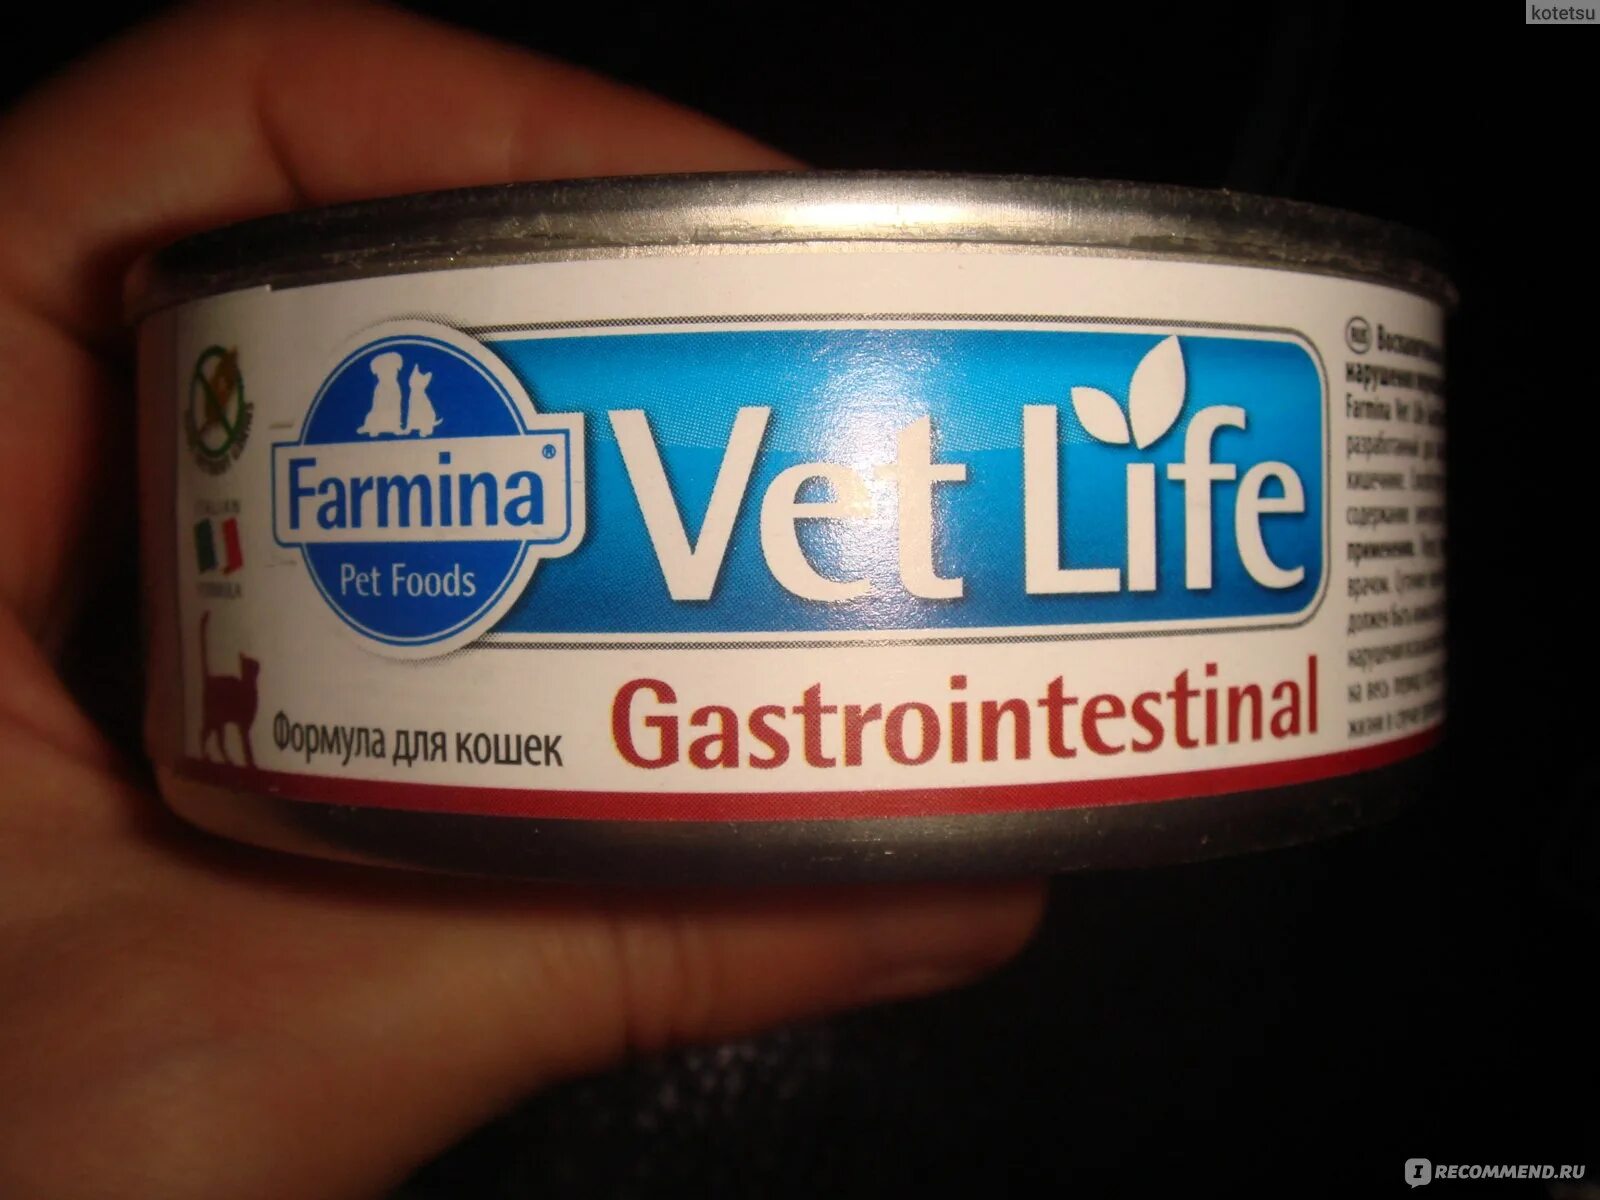 Фармина Gastrointestinal для кошек. Farmina Gastrointestinal для кошек паштет. Vet Life Gastrointestinal корм для кошек. Фармина Ренал для кошек влажный. Farmina влажный для кошек